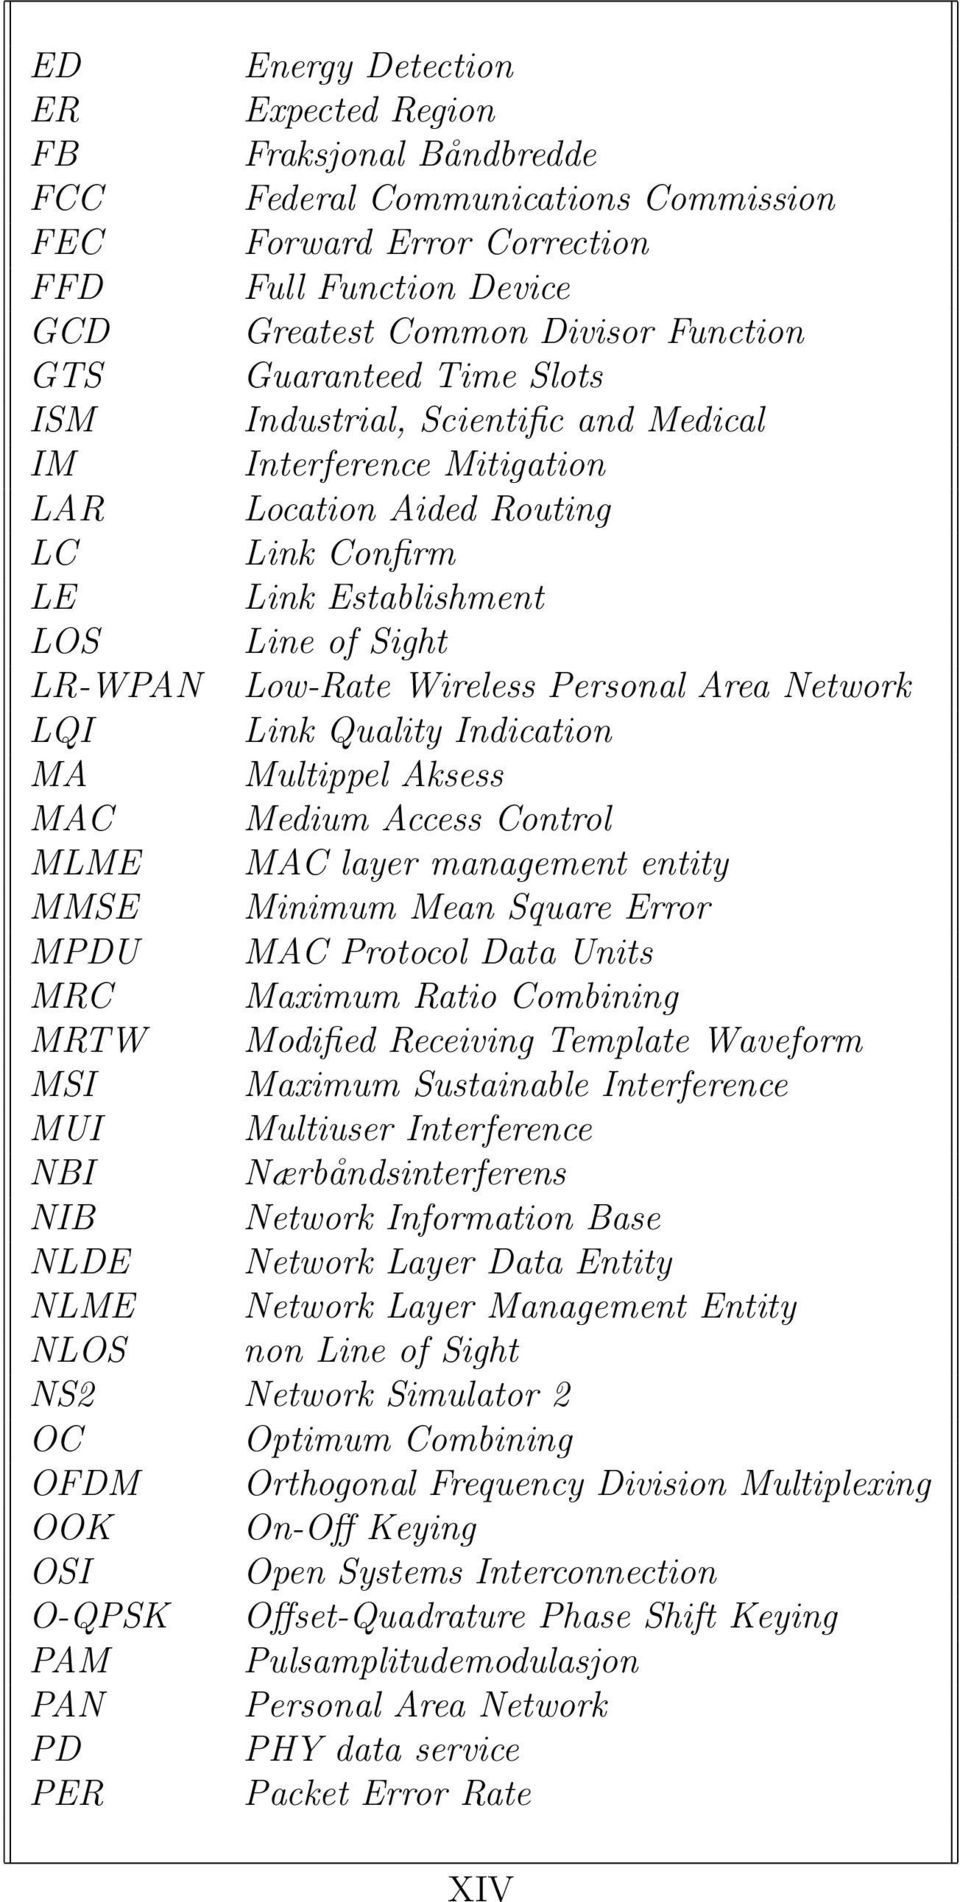 Personal Area Network LQI Link Quality Indication MA Multippel Aksess MAC Medium Access Control MLME MAC layer management entity MMSE Minimum Mean Square Error MPDU MAC Protocol Data Units MRC